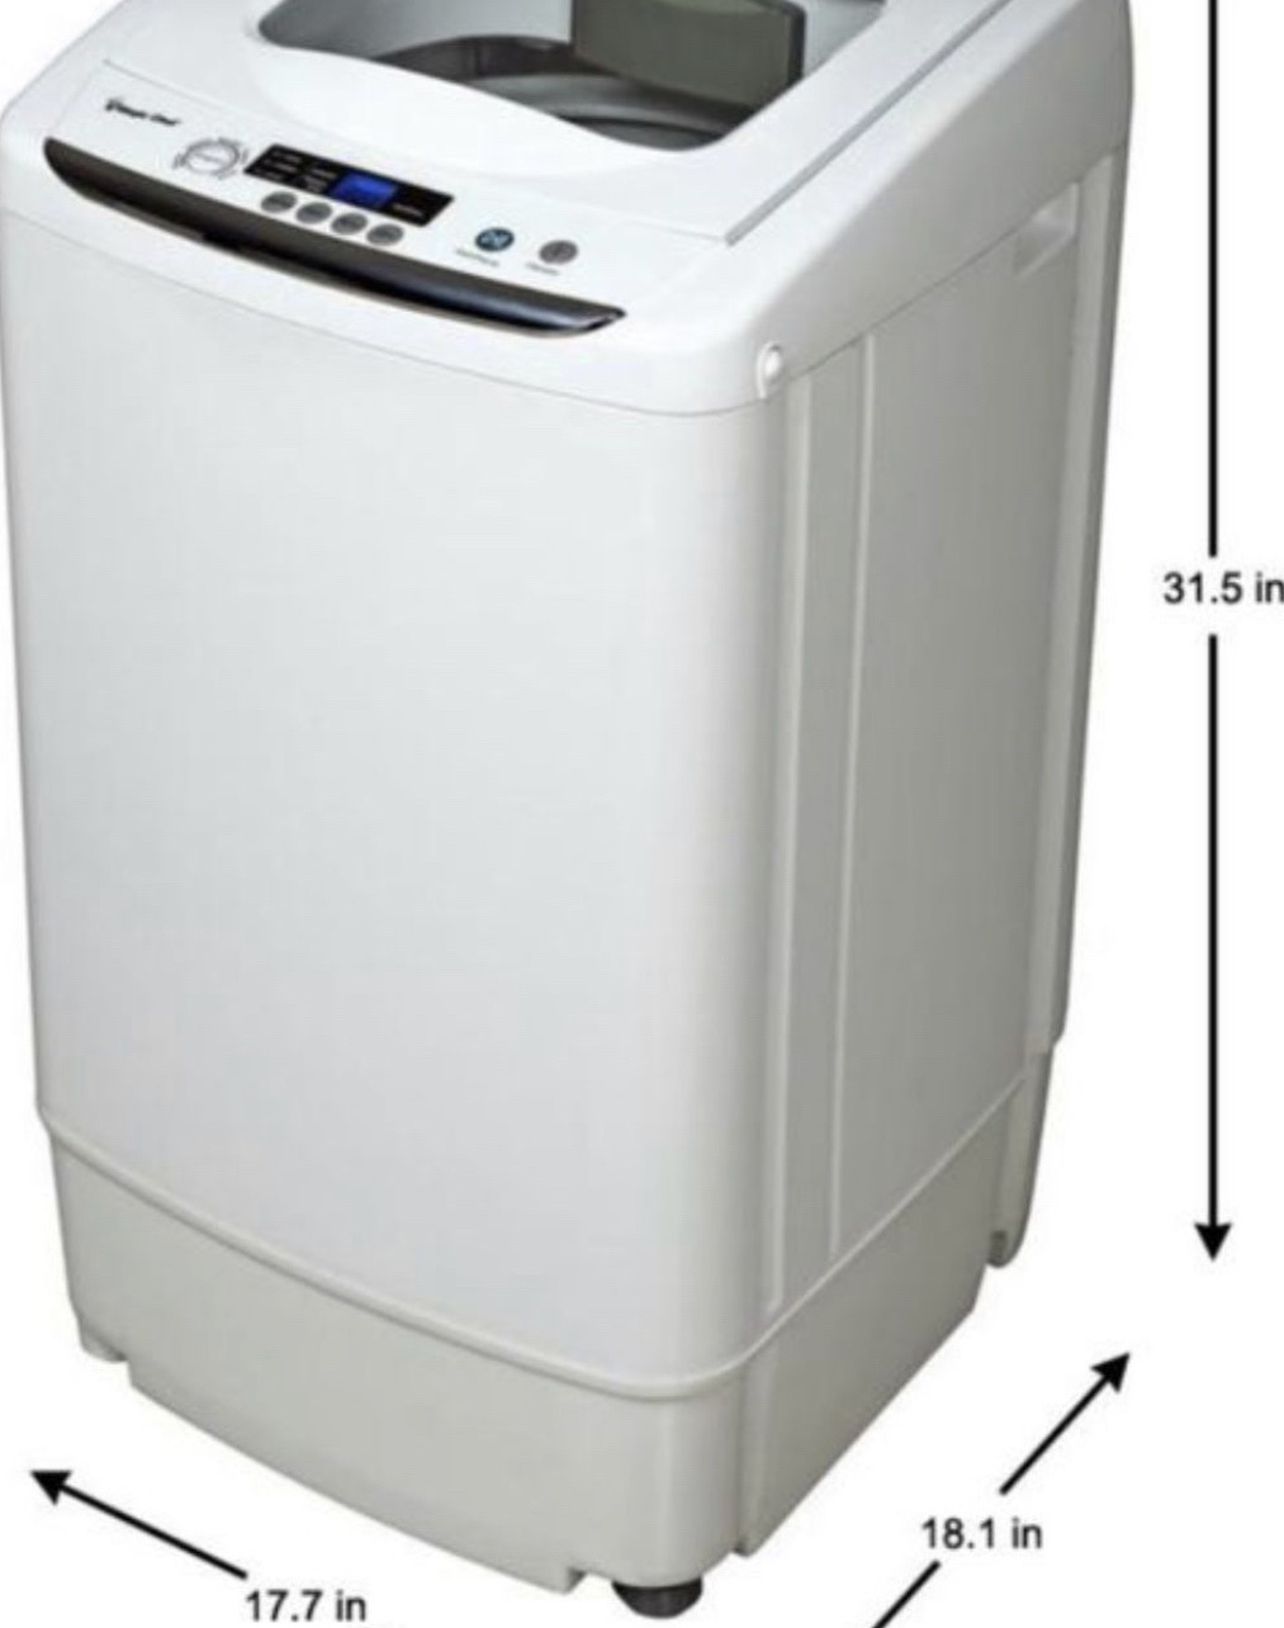 Magic Chef Full Automatic Portable Washing Machine